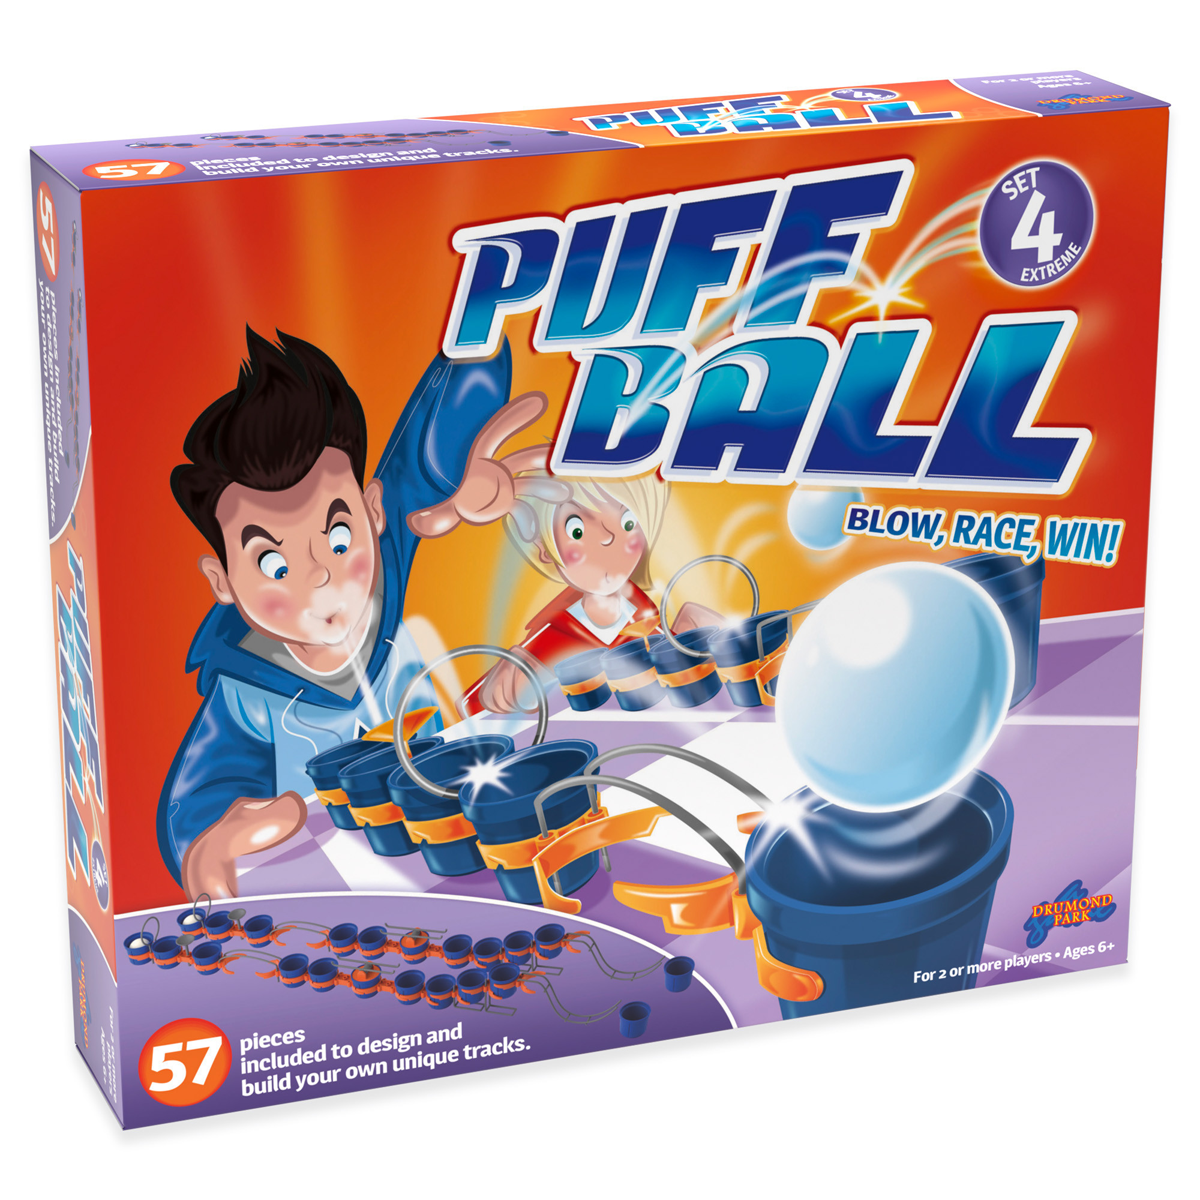 Puff Ball Set 4 Game